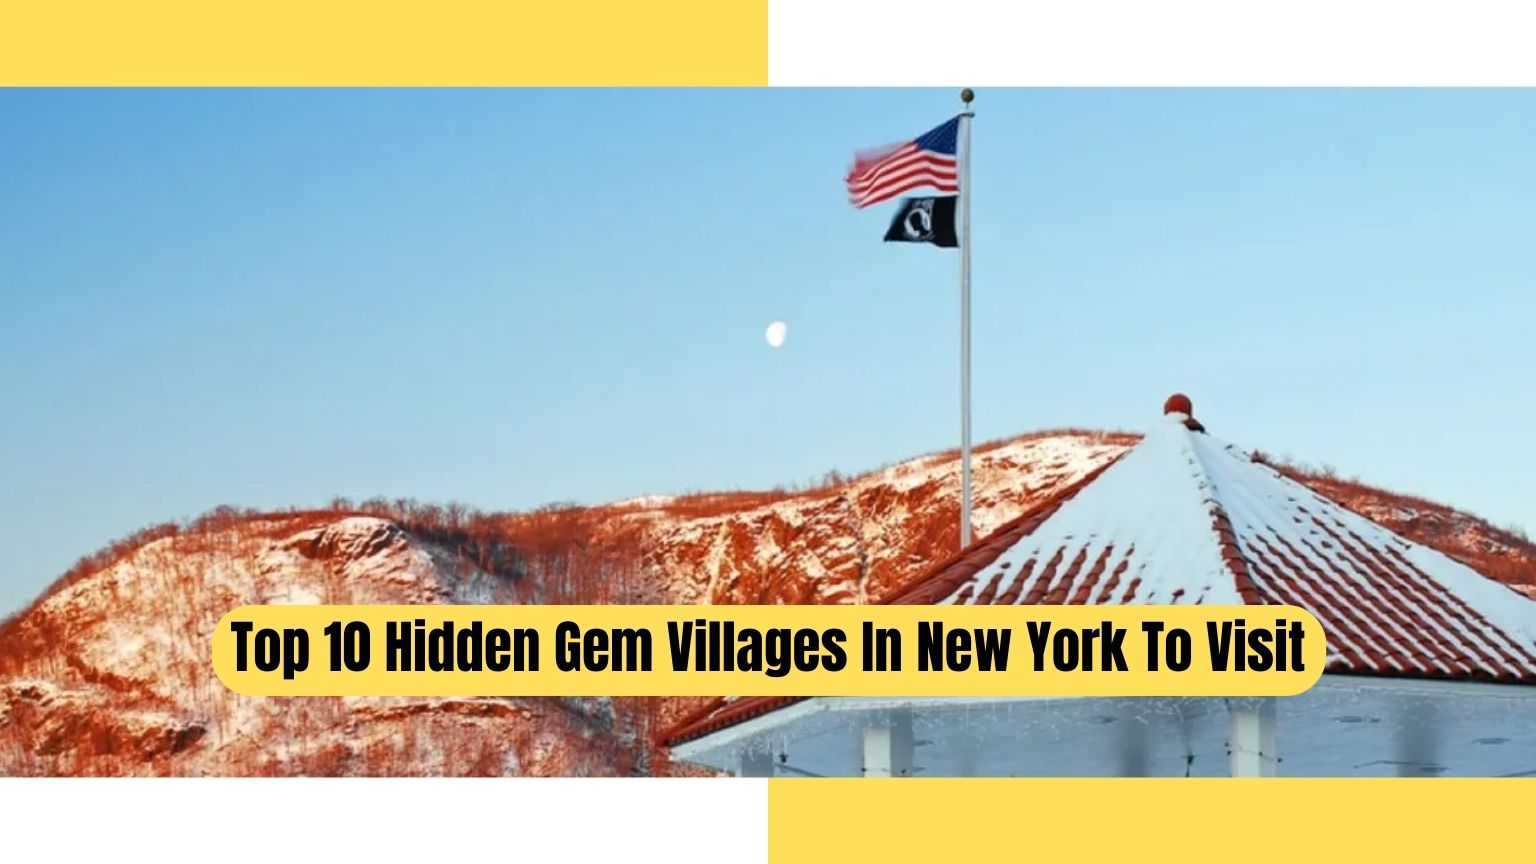 Top 10 Hidden gem villages in new york to visit, hidden gem village in New York to visit, Hidden gem villages in new york to visit, Hidden Gem Villages In New York,